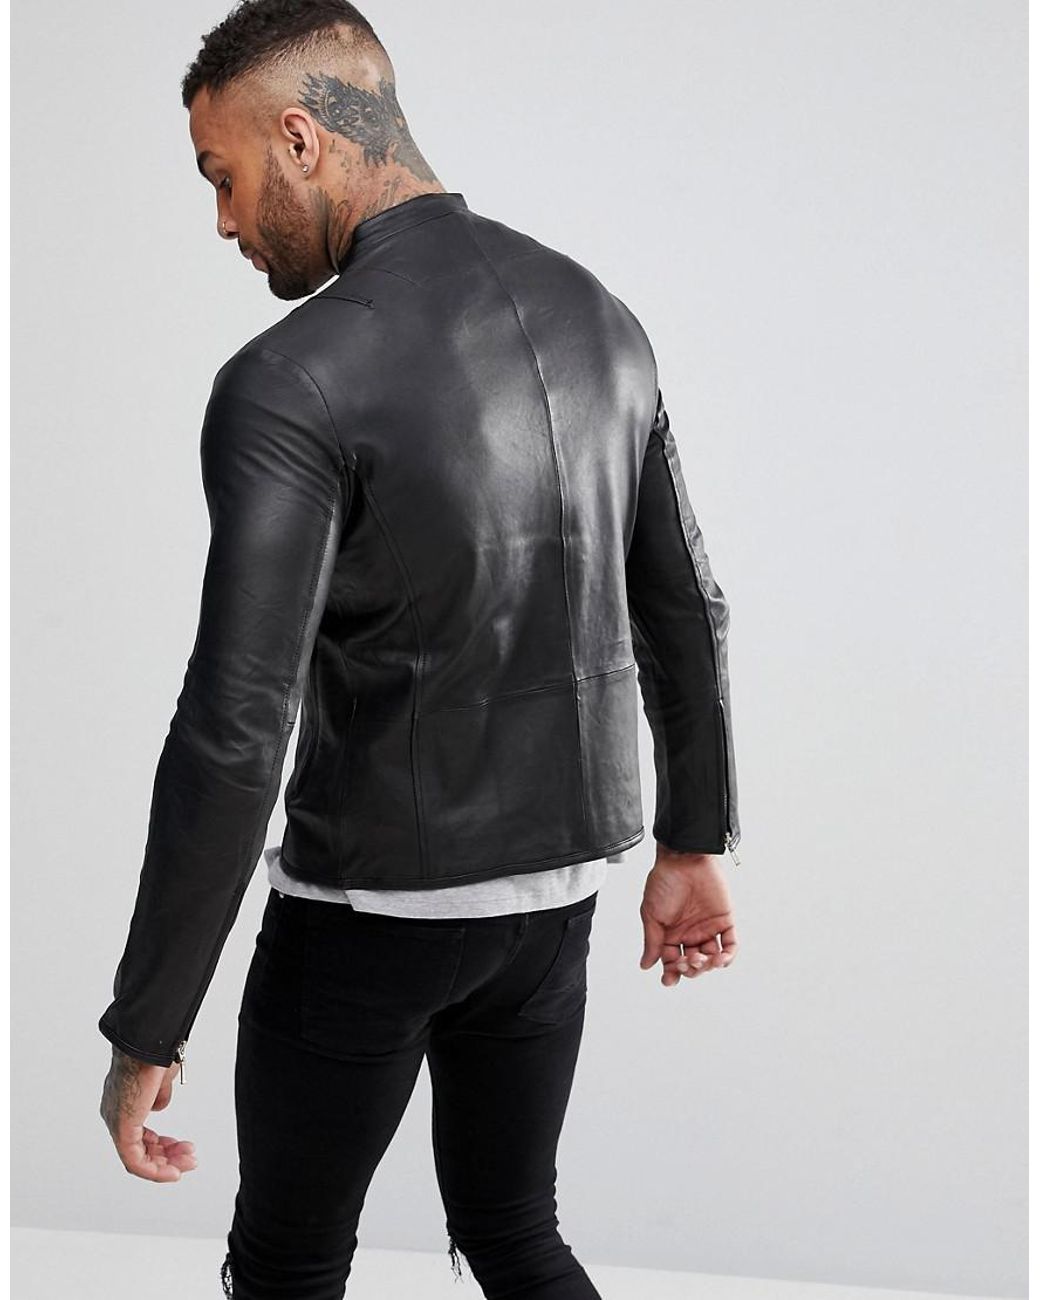 Mens Collarless Leather Jacket | vlr.eng.br